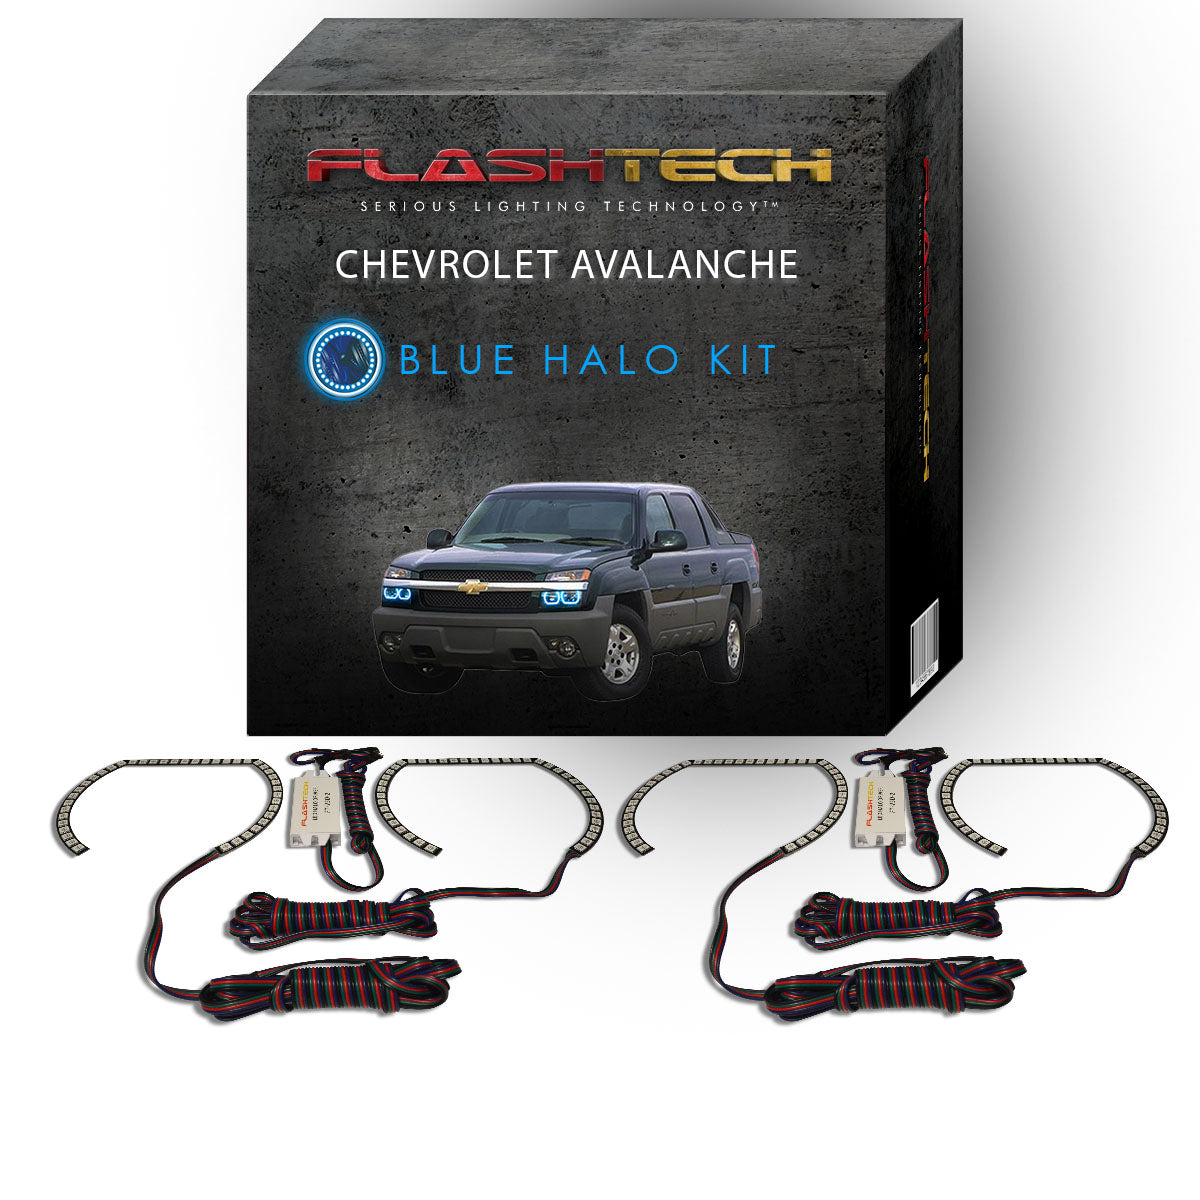 Chevrolet-Avalanche-2003, 2004, 2005, 2006-LED-Halo-Headlights-RGB-Bluetooth RF Remote-CY-AVC0306-V3HBTRF